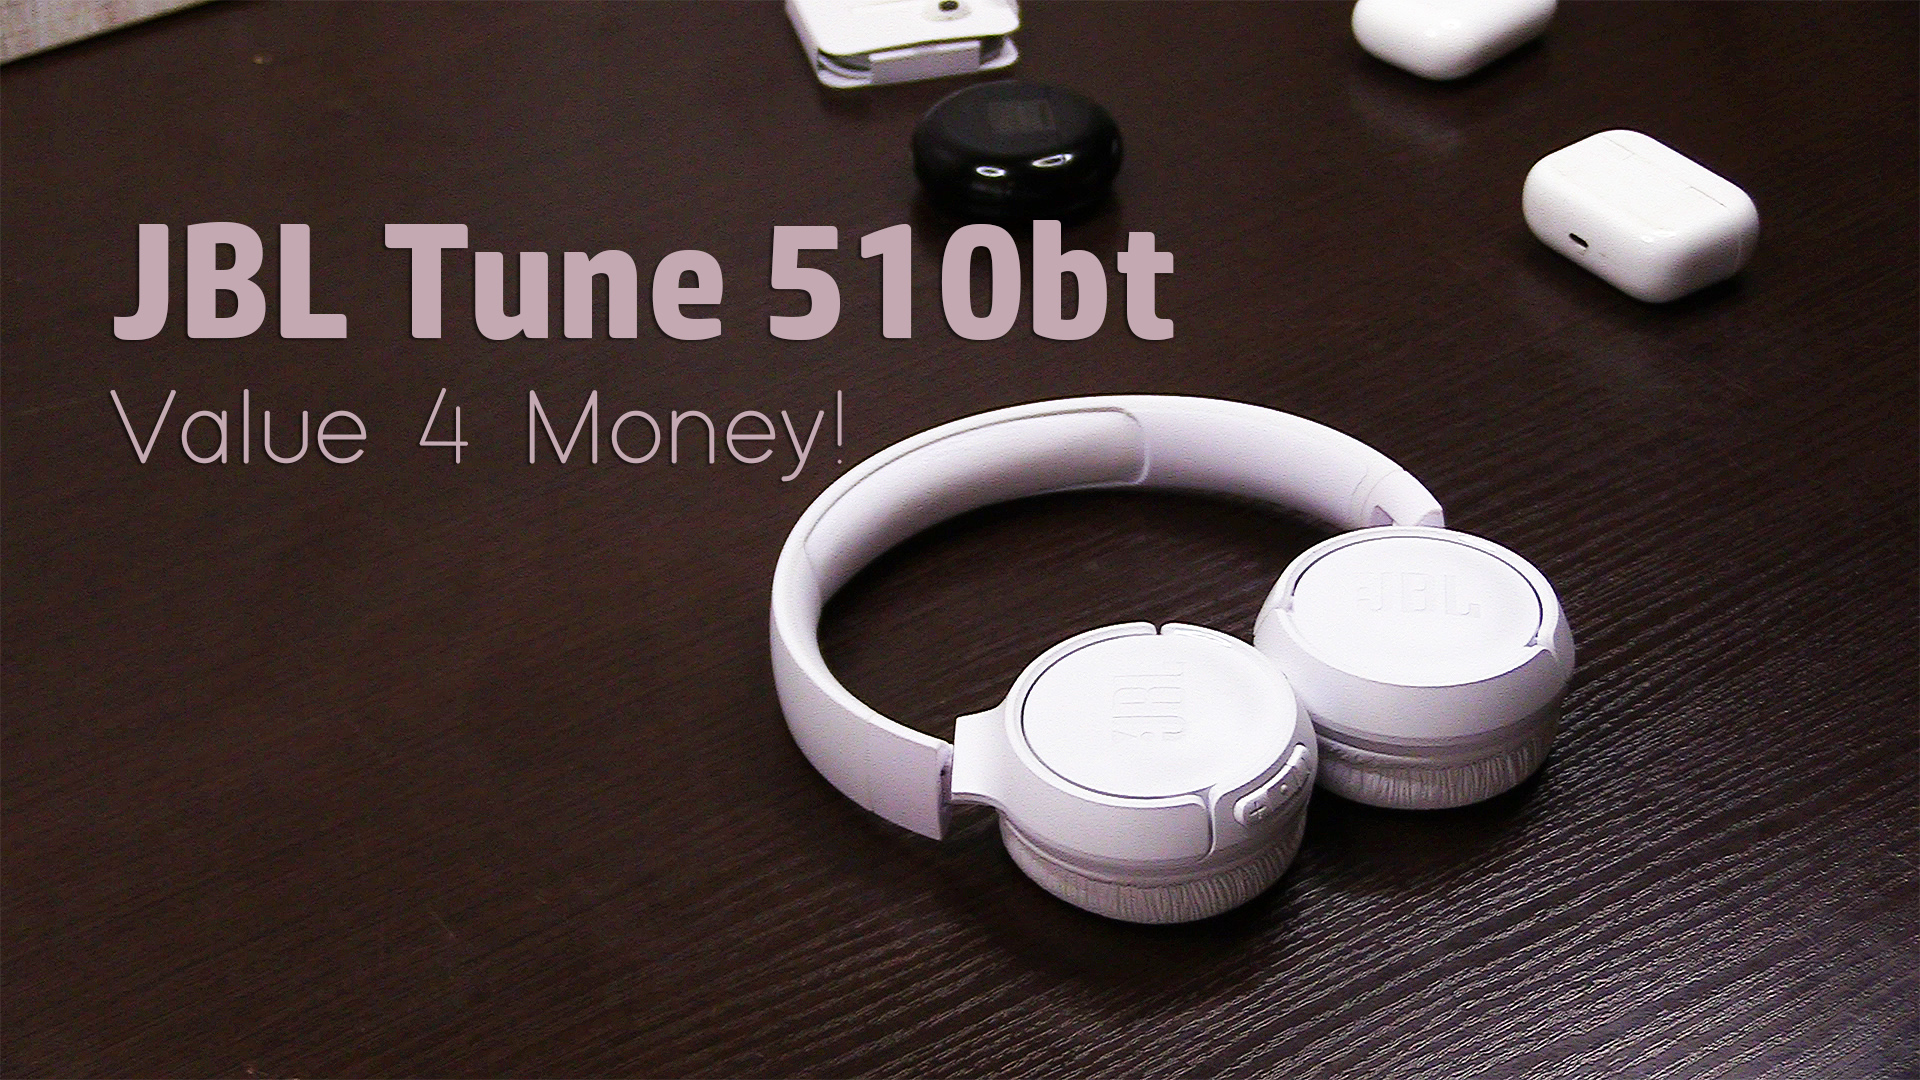 JBL Tune 510 bluetooth headphones. Value for money. - Techzim